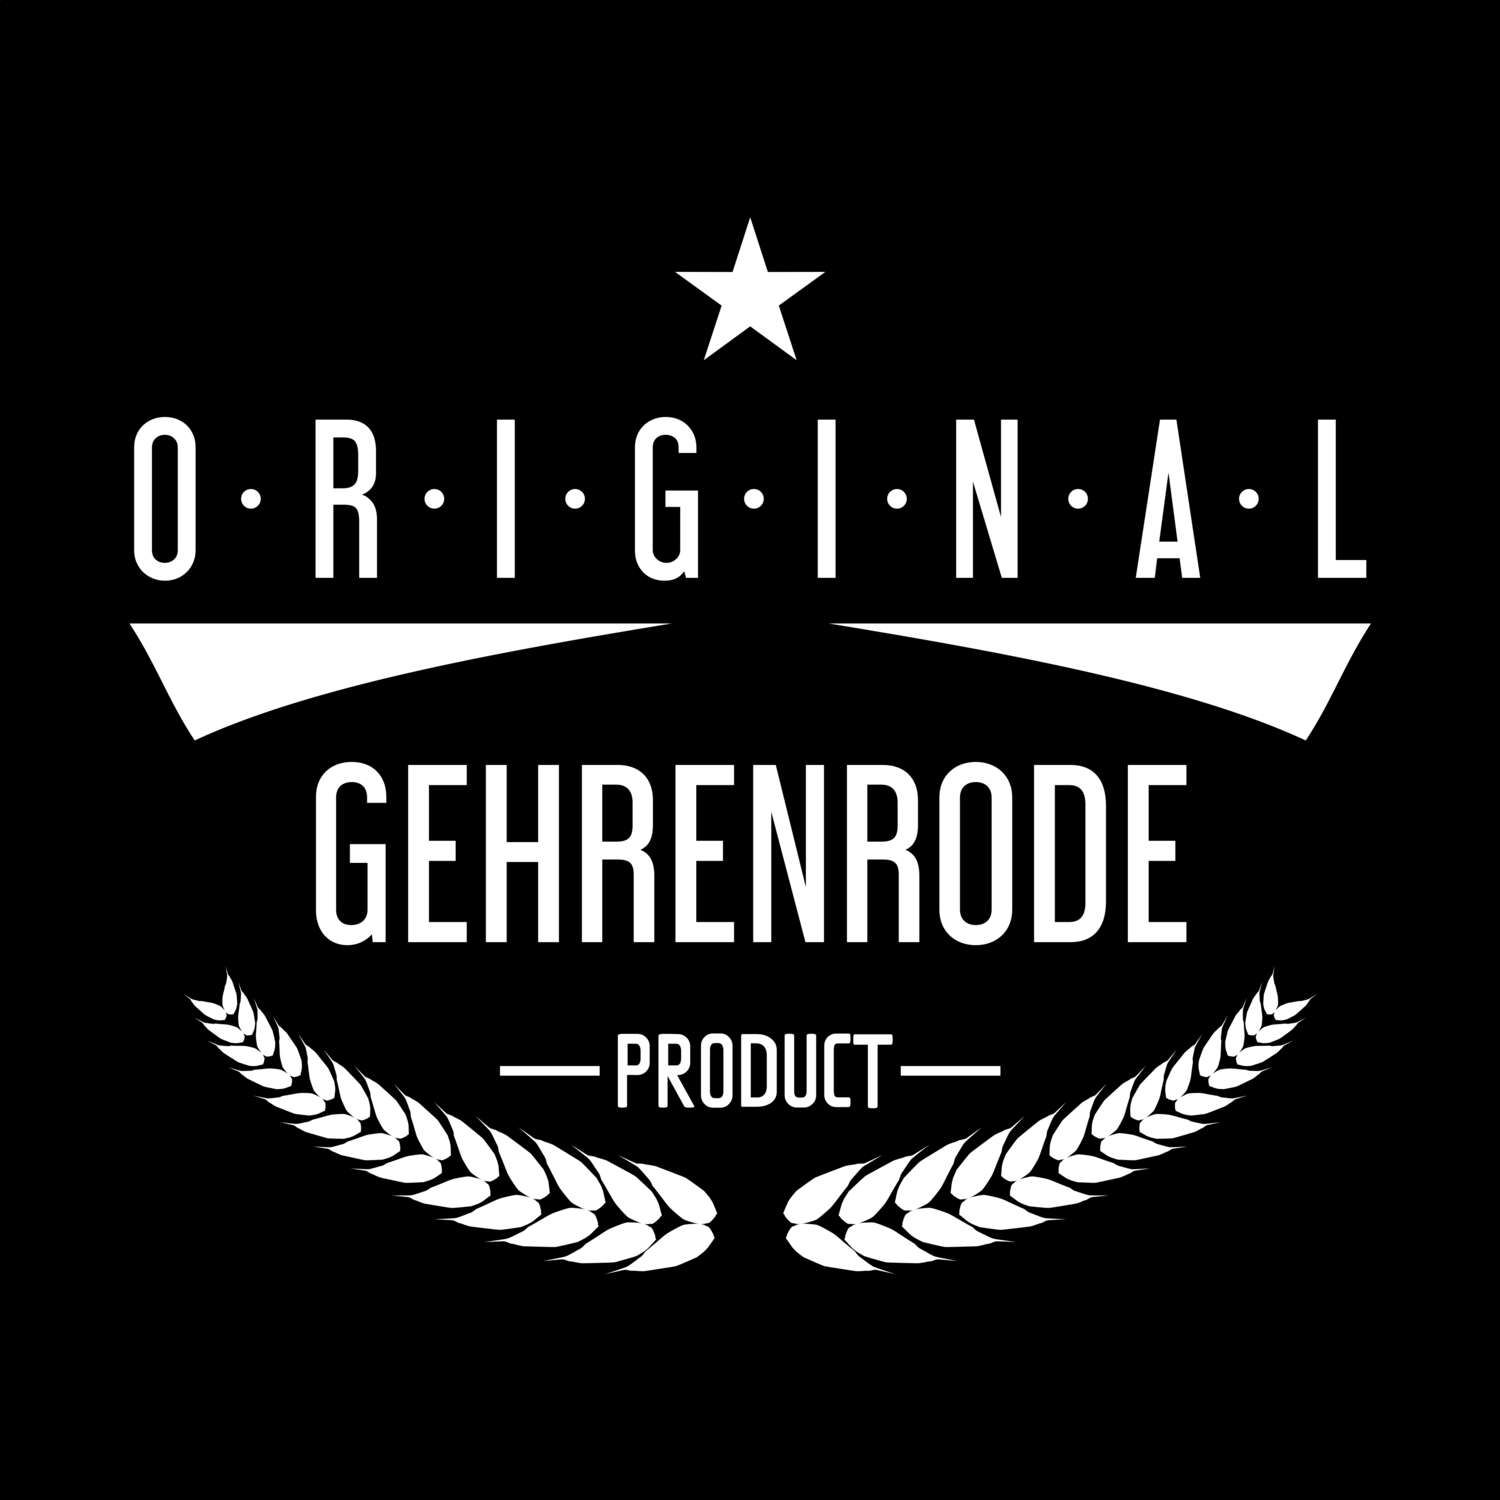 Gehrenrode T-Shirt »Original Product«